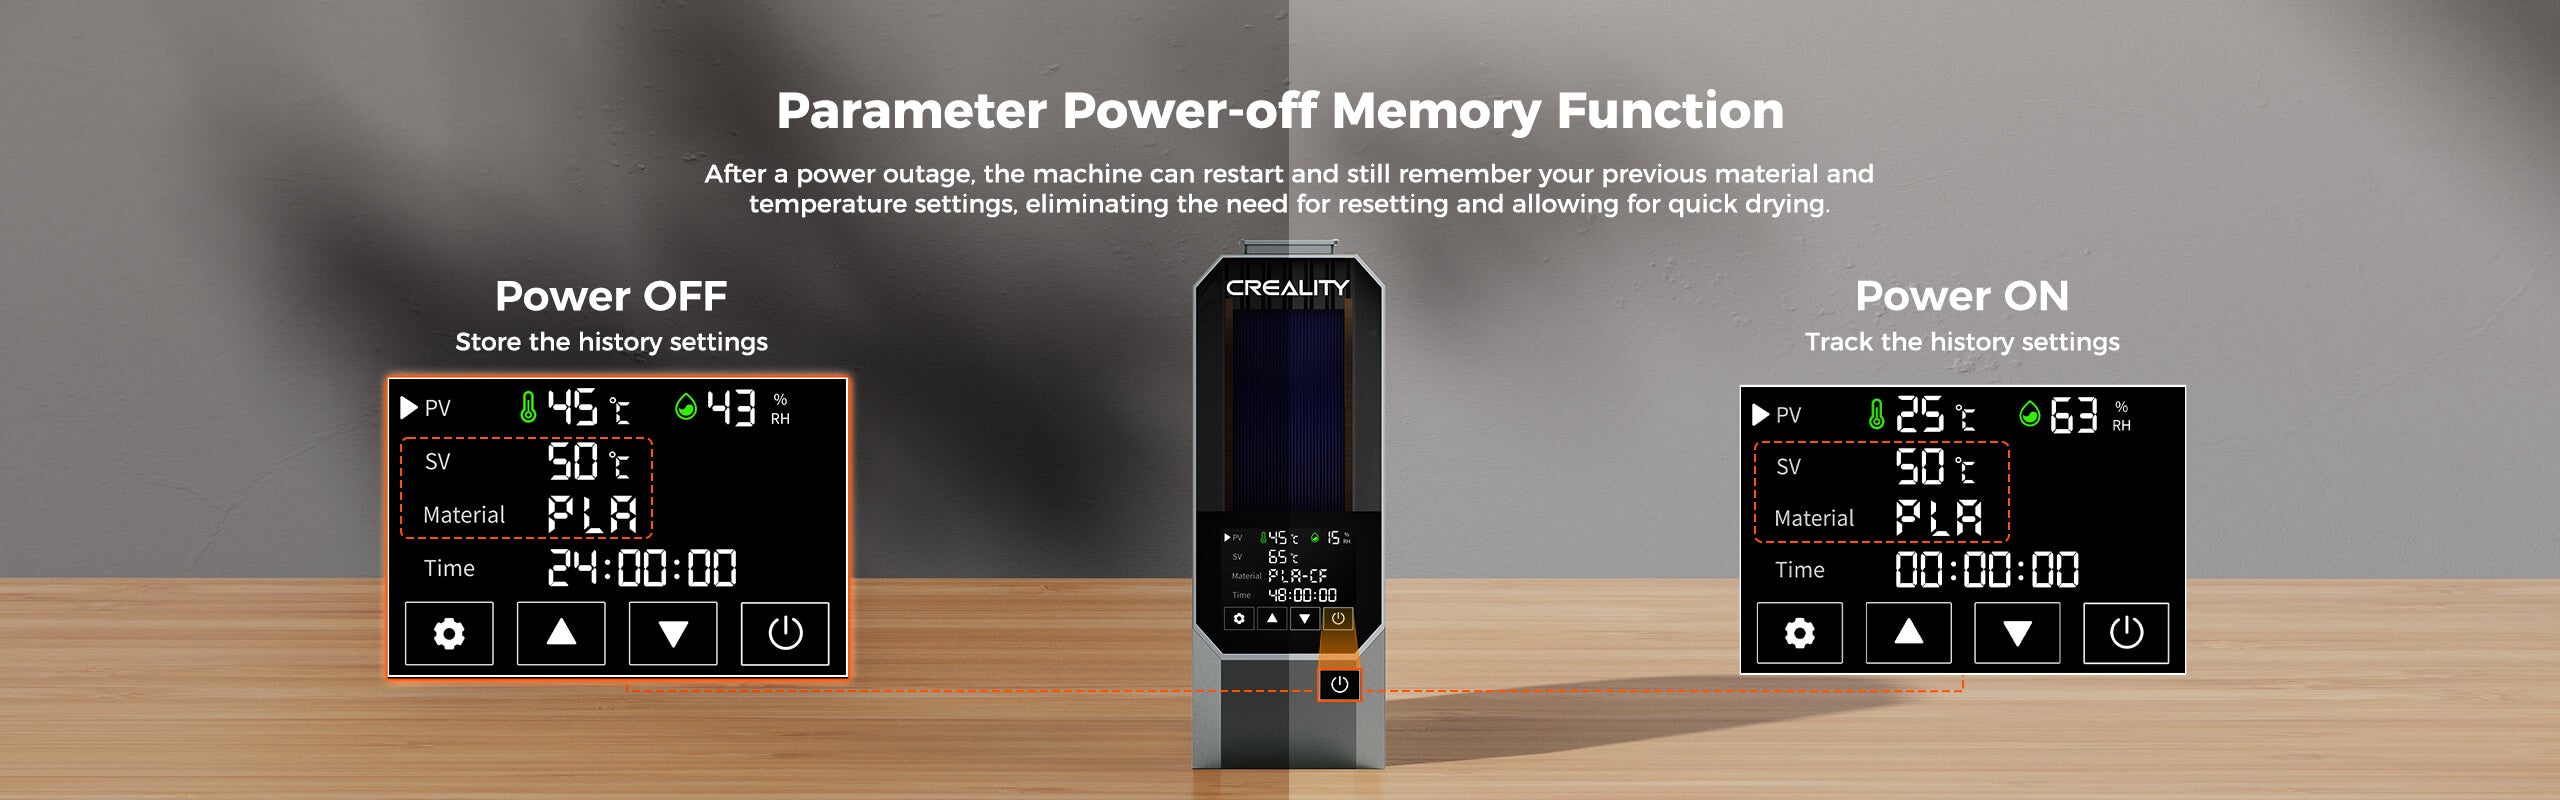 Parameter Power-off Memory Function.